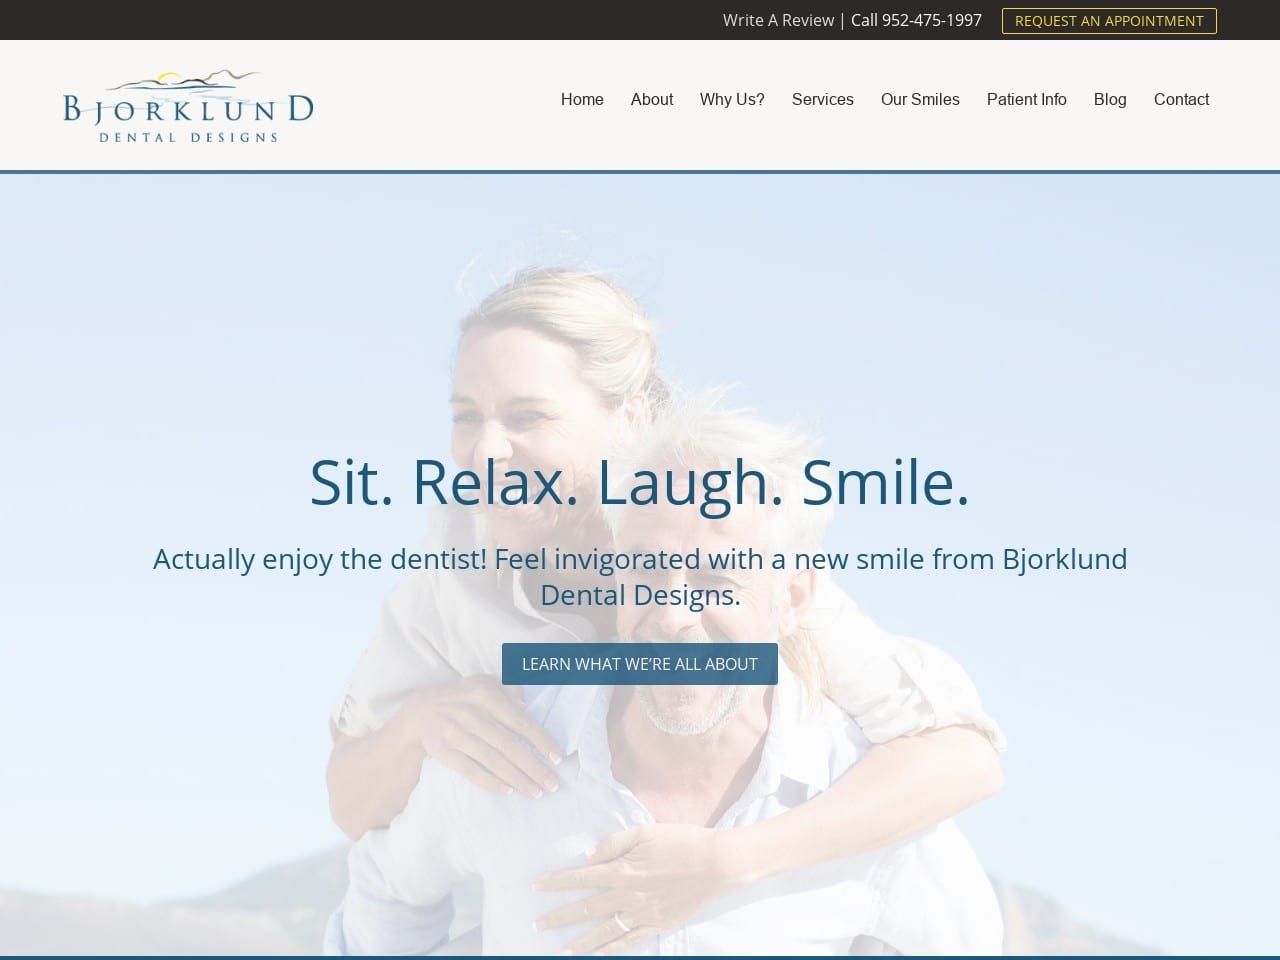 Bjorklund Dental Designs Website Screenshot from mnsmiles.com